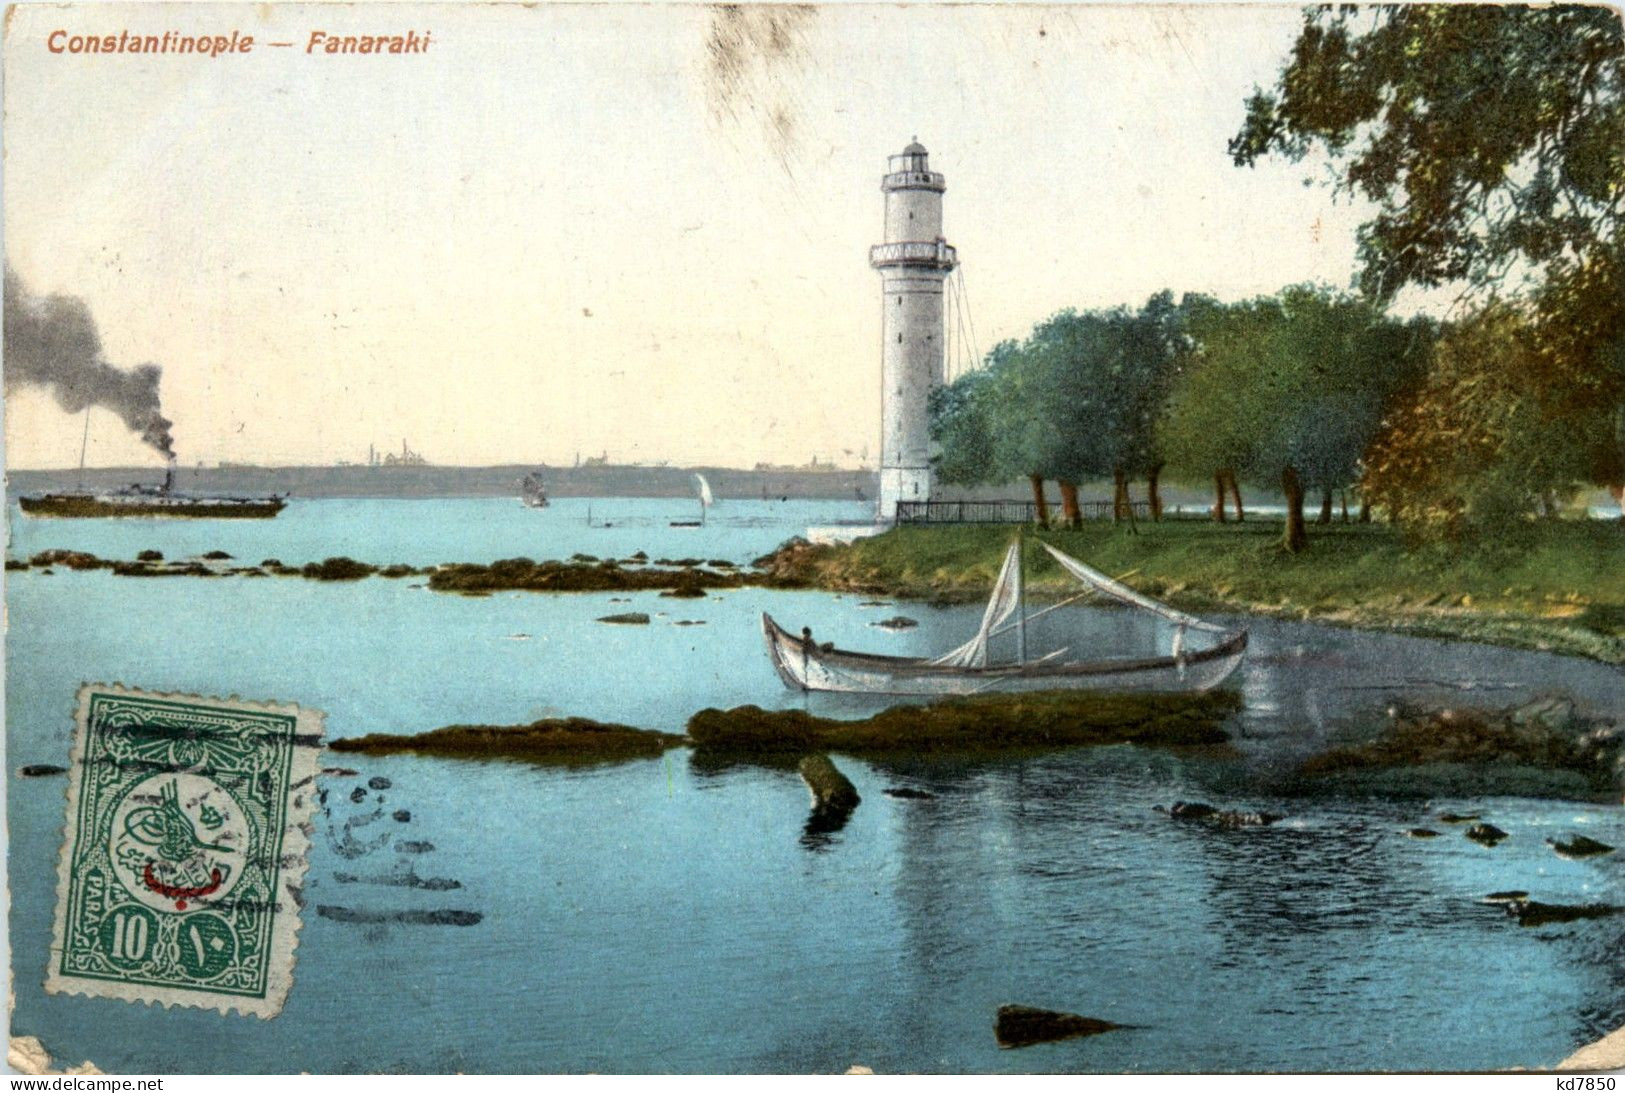 Constantinople - Fanaraki - Turkey